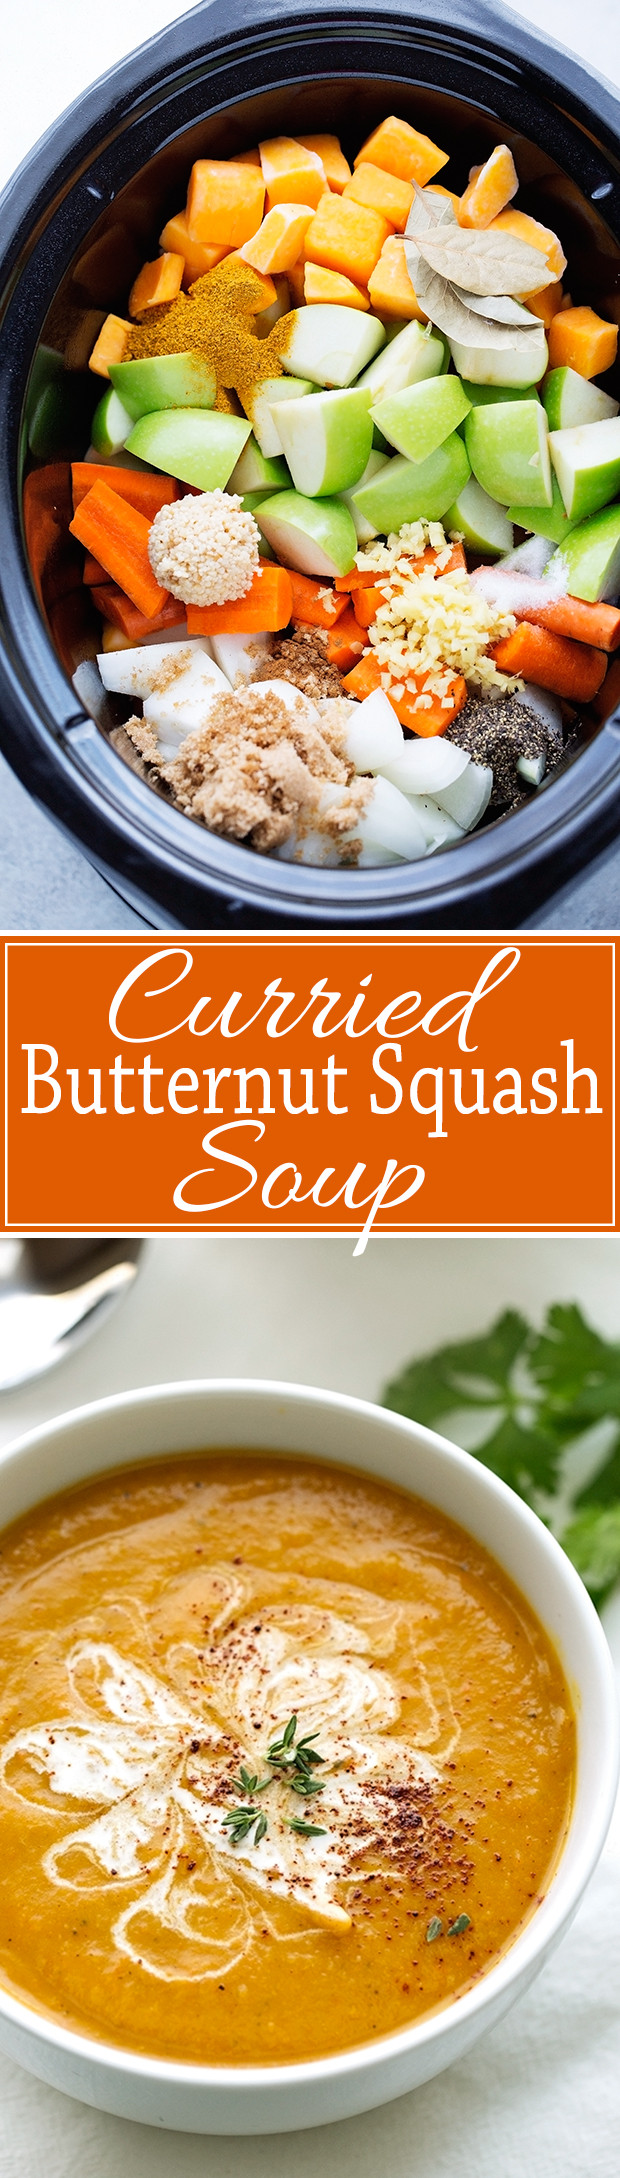 Butternut Squash Soup Slow Cooker
 Slow Cooker Curried Butternut Squash Soup Recipe